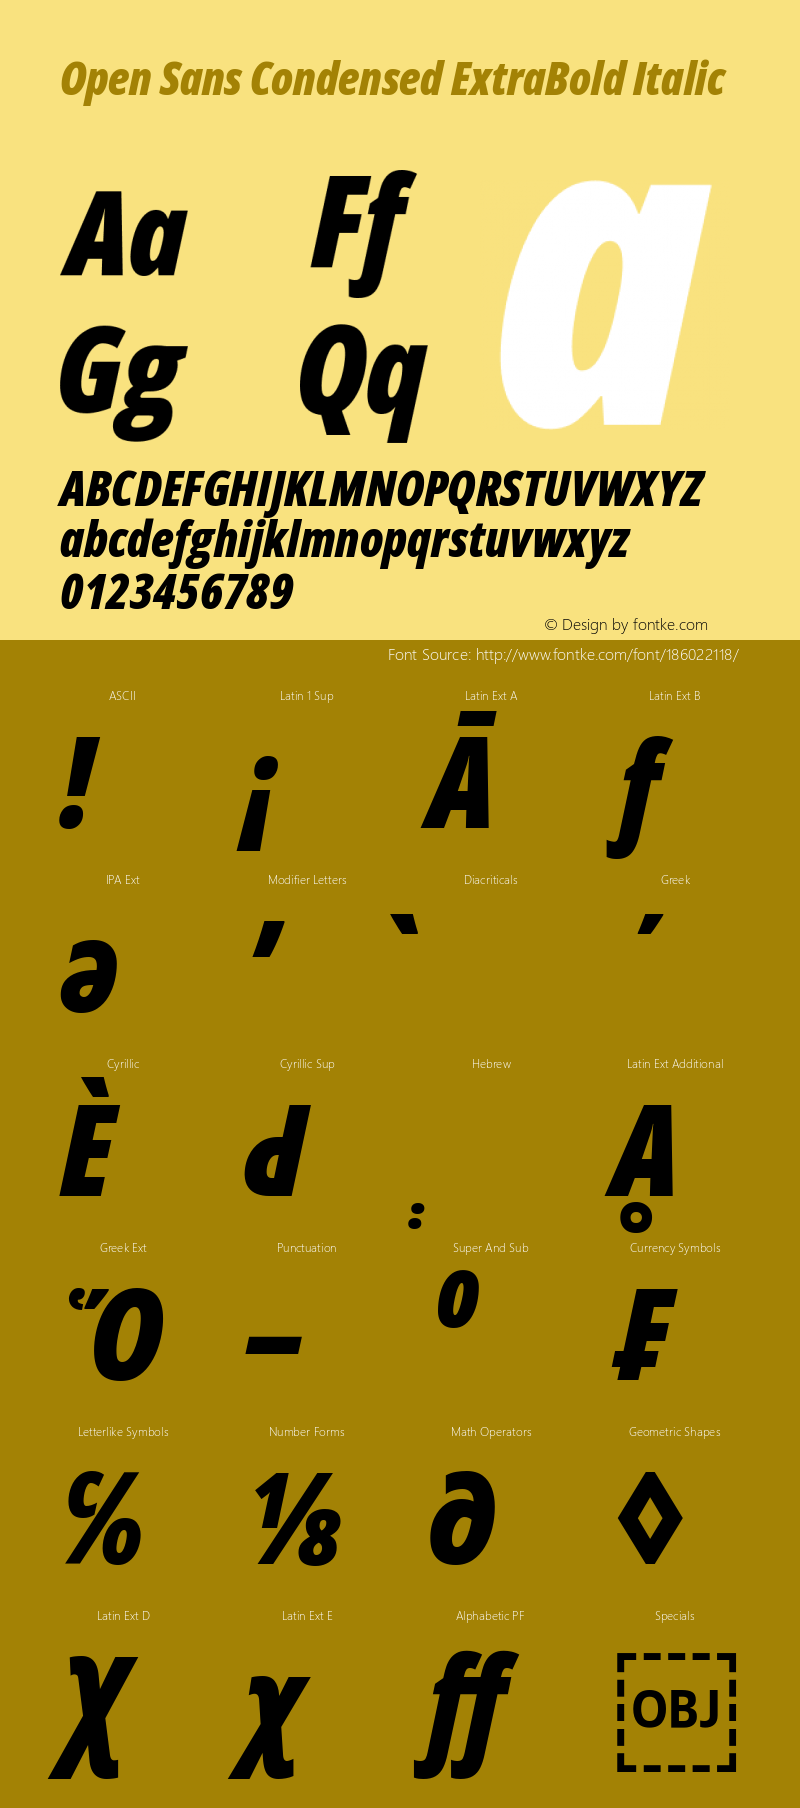 Open Sans Condensed ExtraBold Italic Version 3.000; ttfautohint (v1.8.4)图片样张